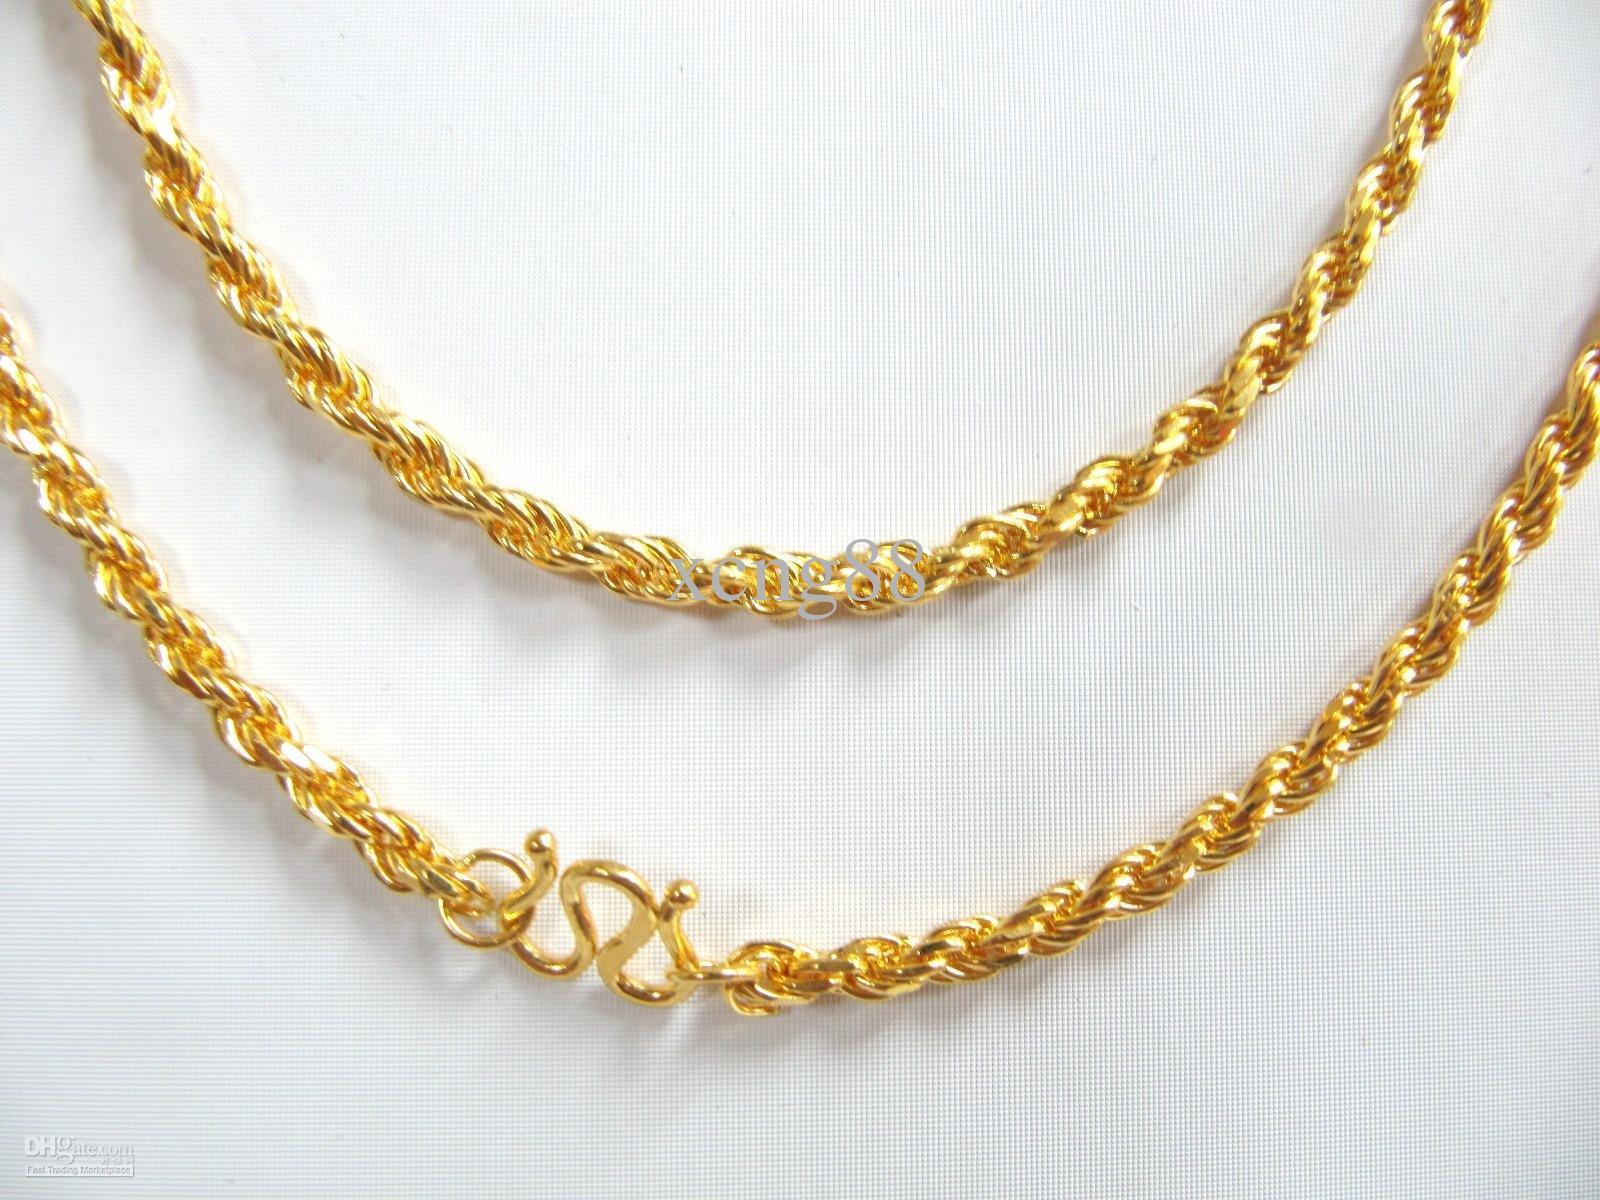 Gold Necklace For Men HD Wallpaper, Background Image